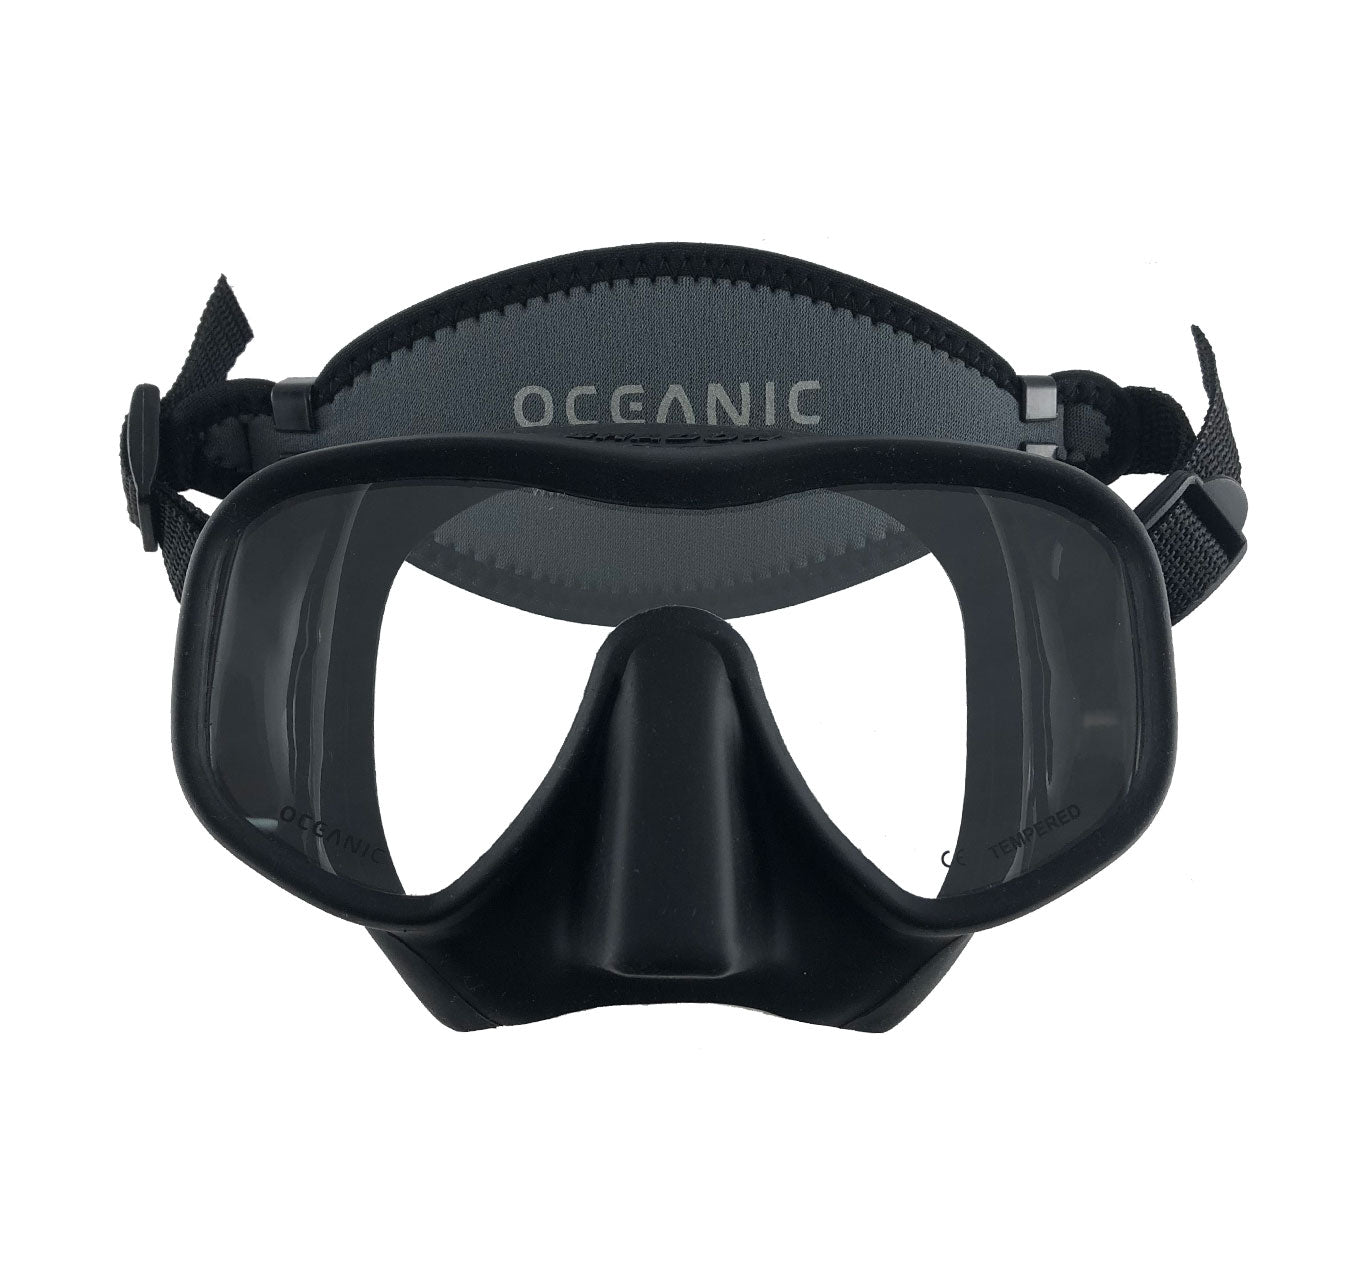 Oceanic Shadow Mask Black - Fergo's Tackle World